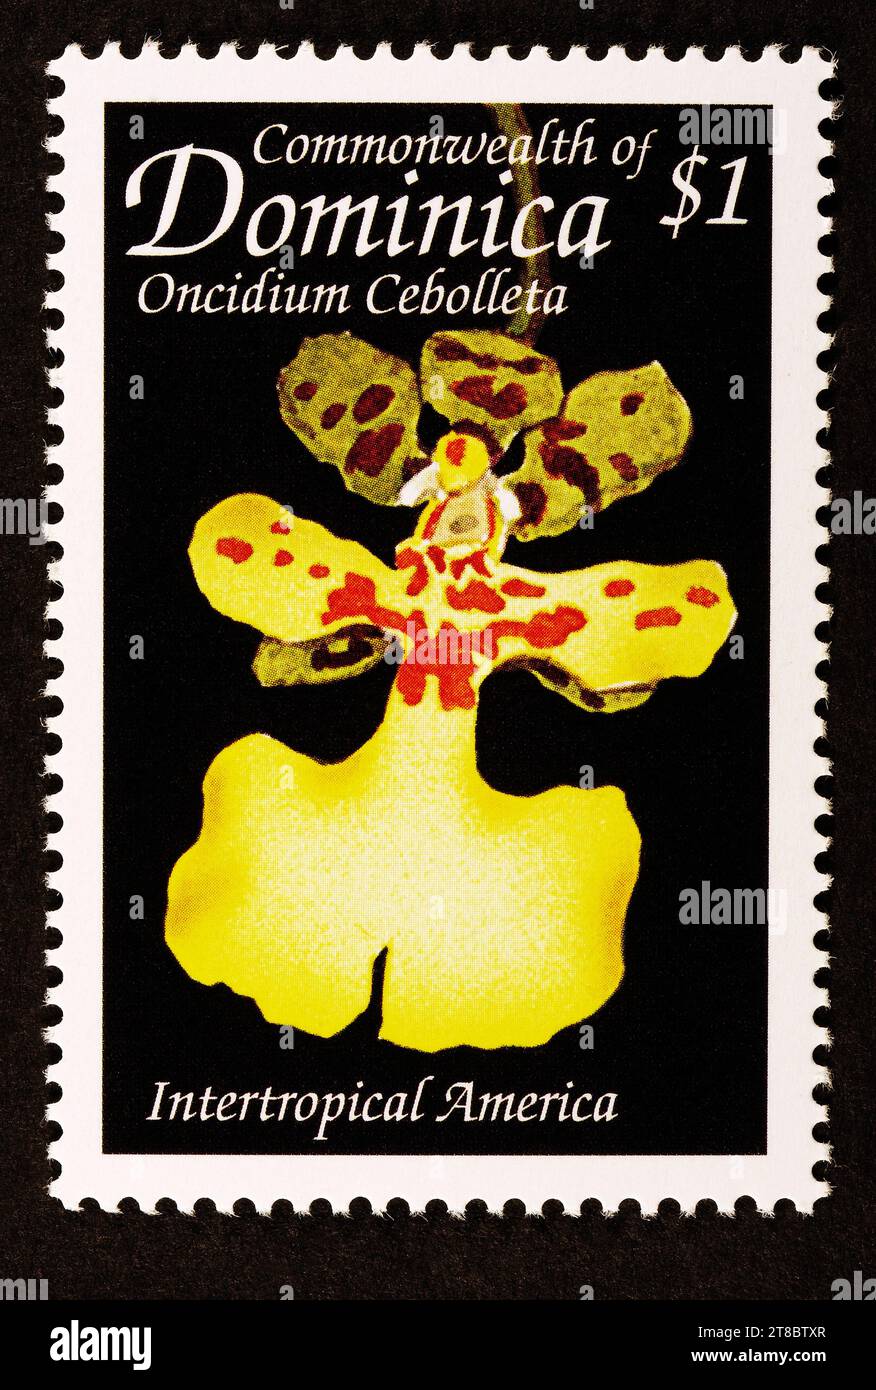 Oncidium cebolleta 'The Onion Leaf Oncidium' Dominica, Postage Stamp, 1999 Stock Photo